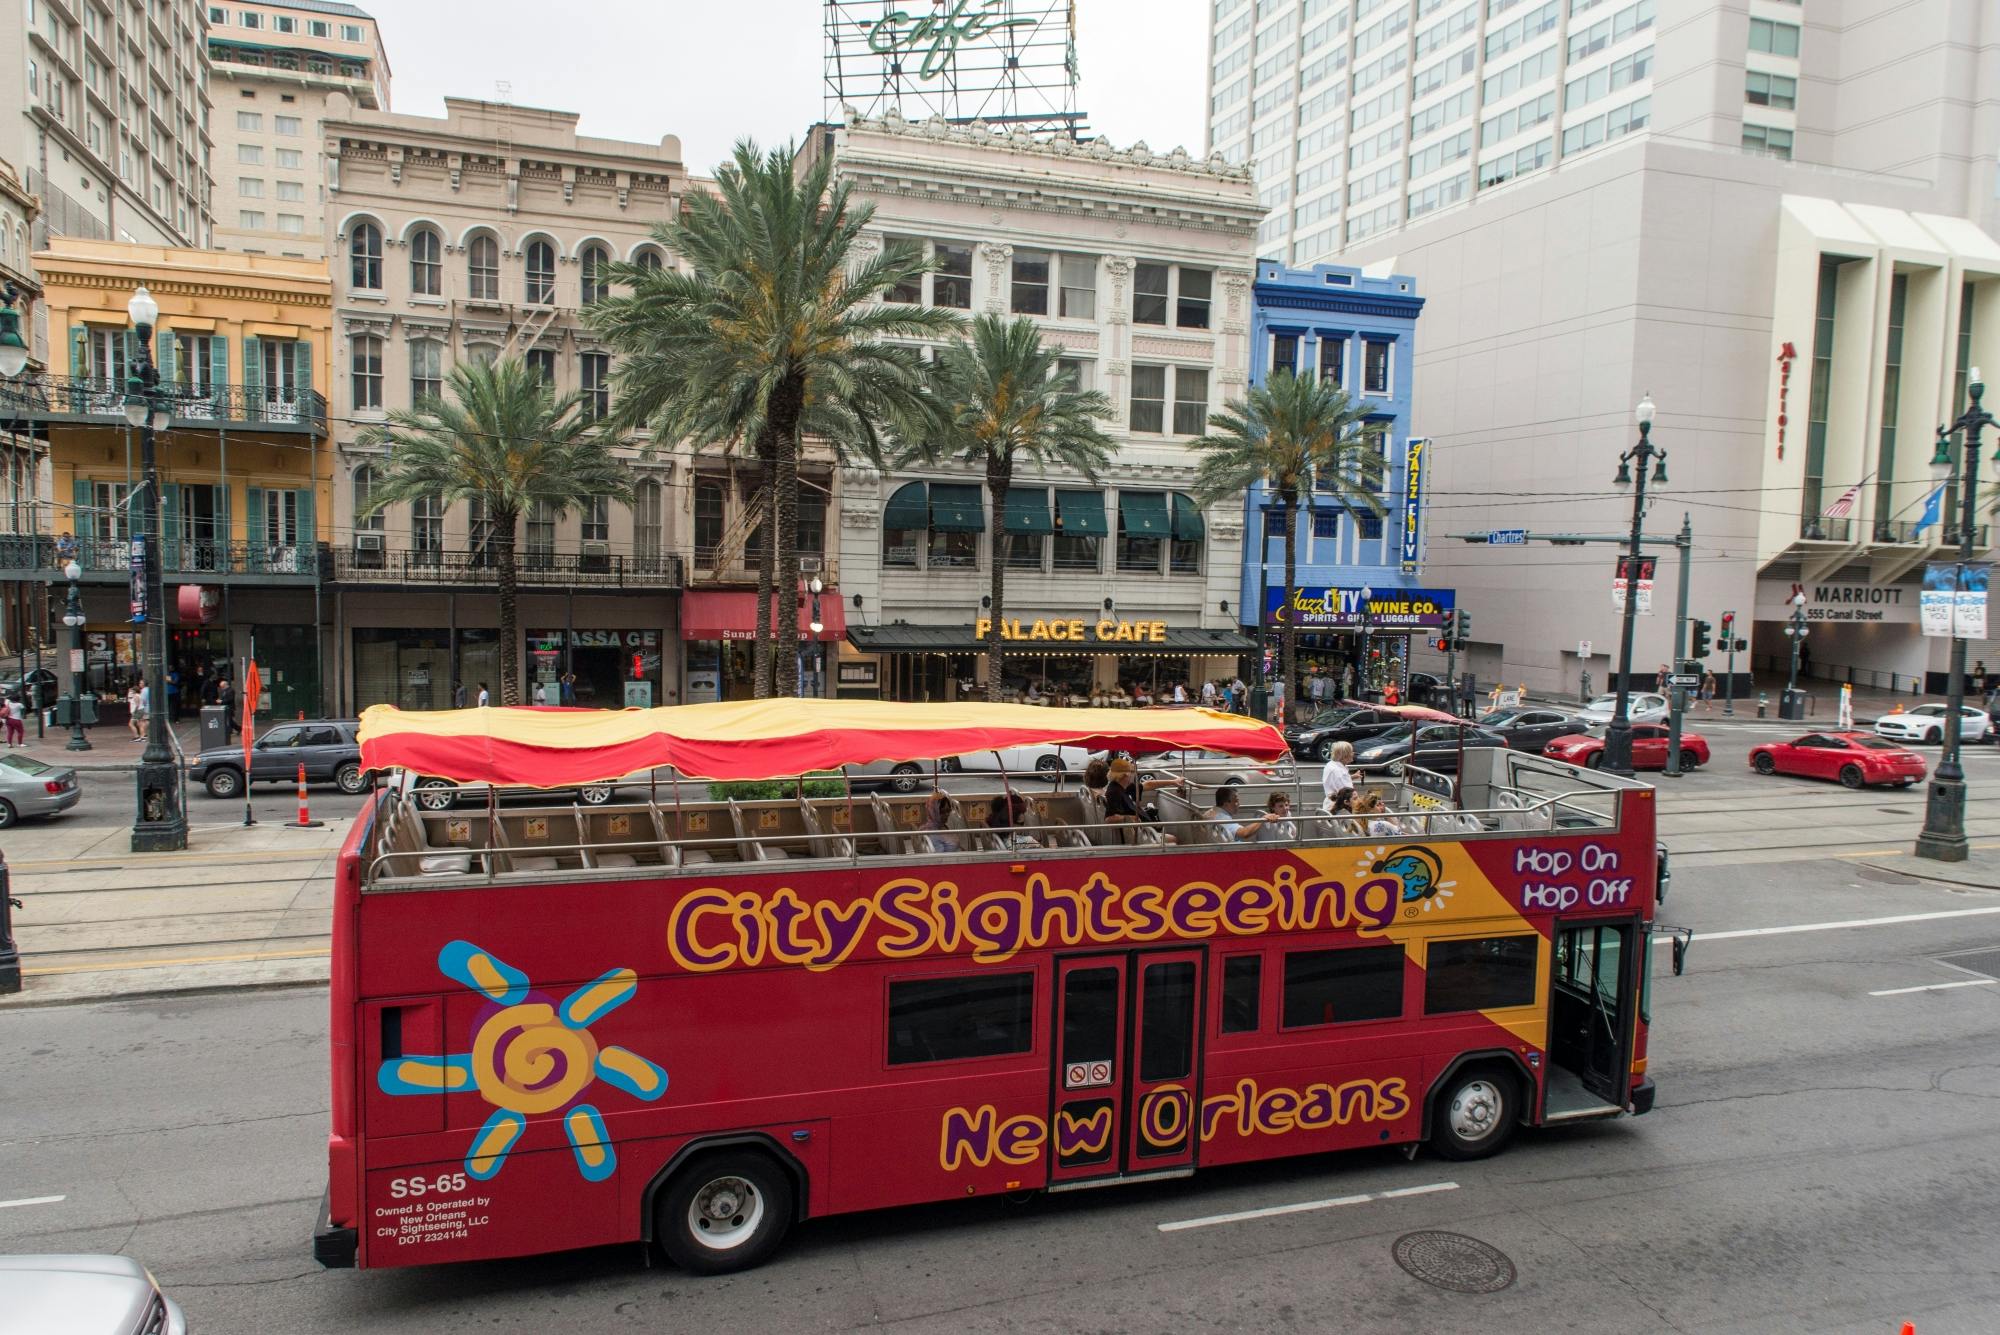 Hop-on hop-off bus tour of New Orleans Musement